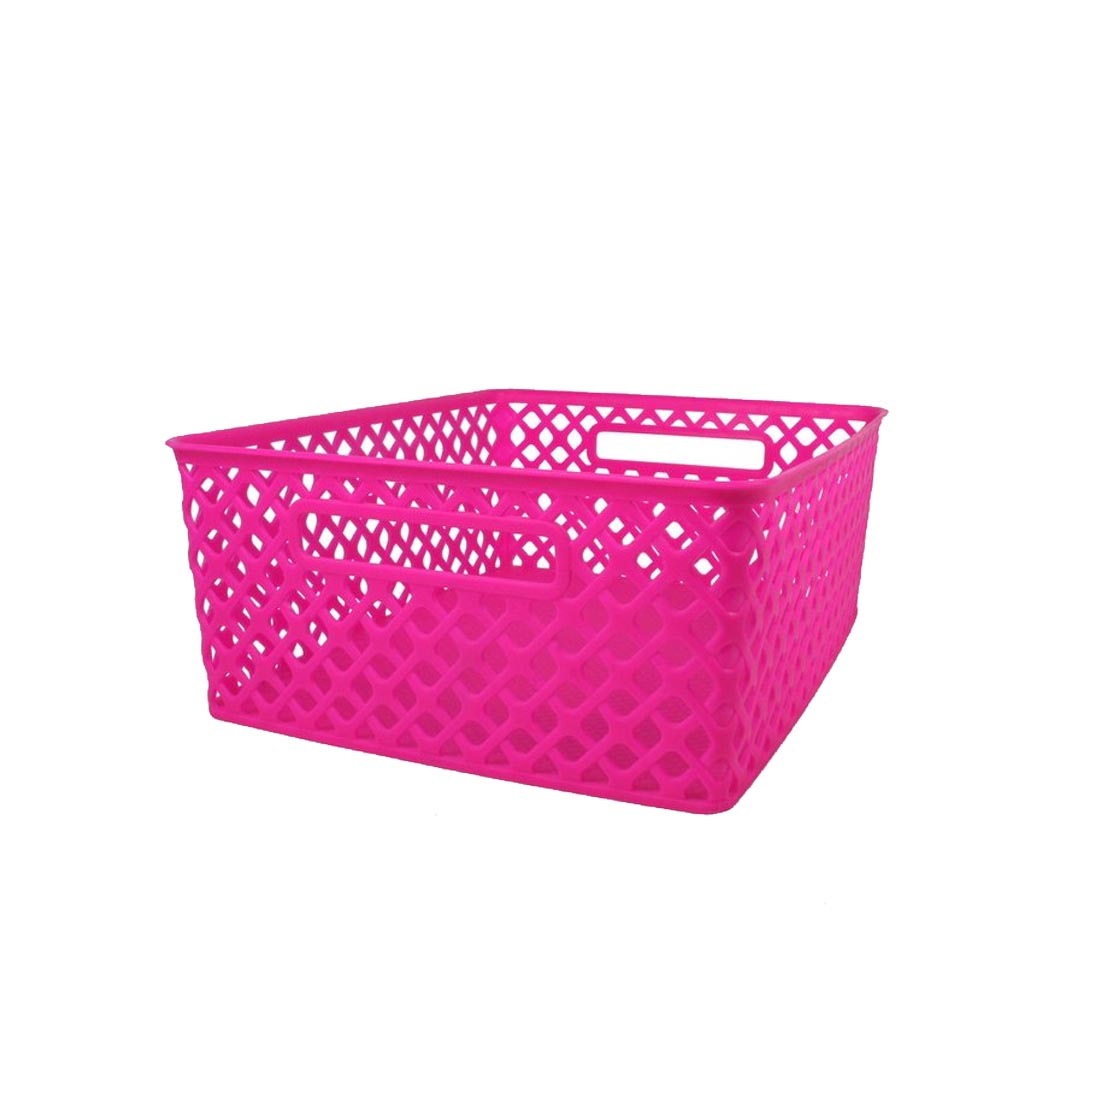 Romanoff Products Medium Hot Pink Weave Storage Basket